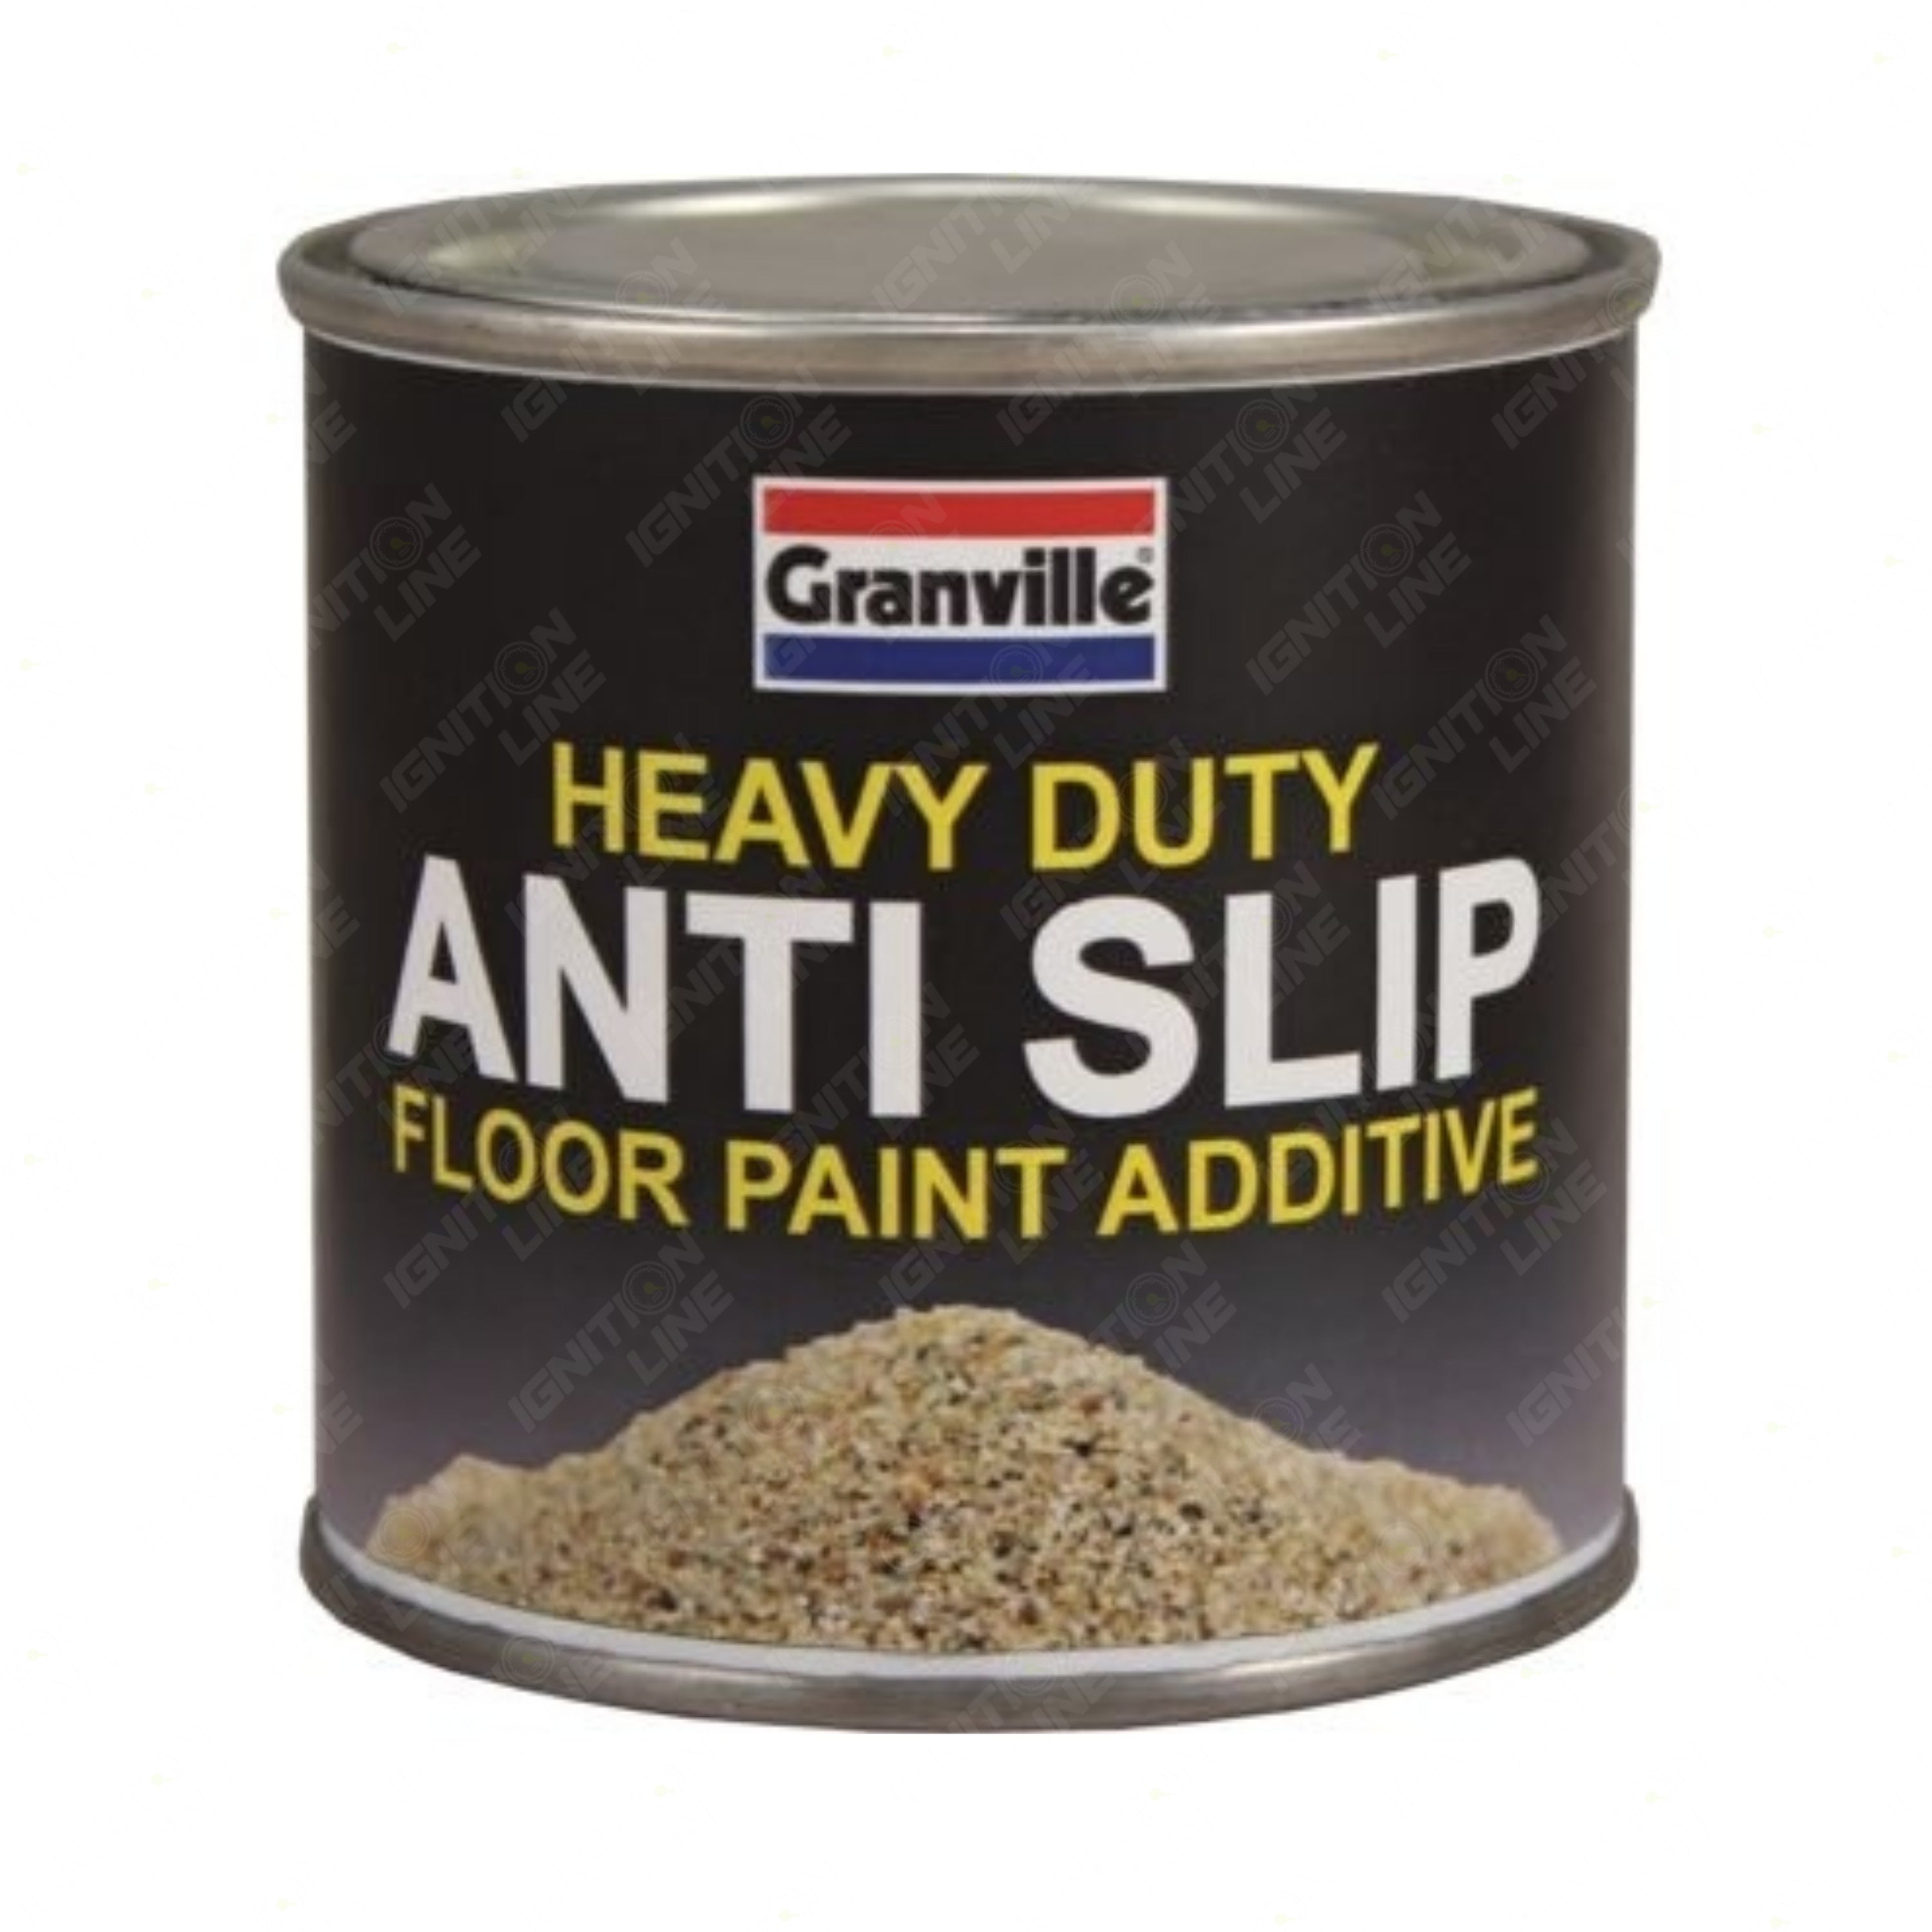 Granville Heavy Duty Anti Slip Floor Paint Additive 250g